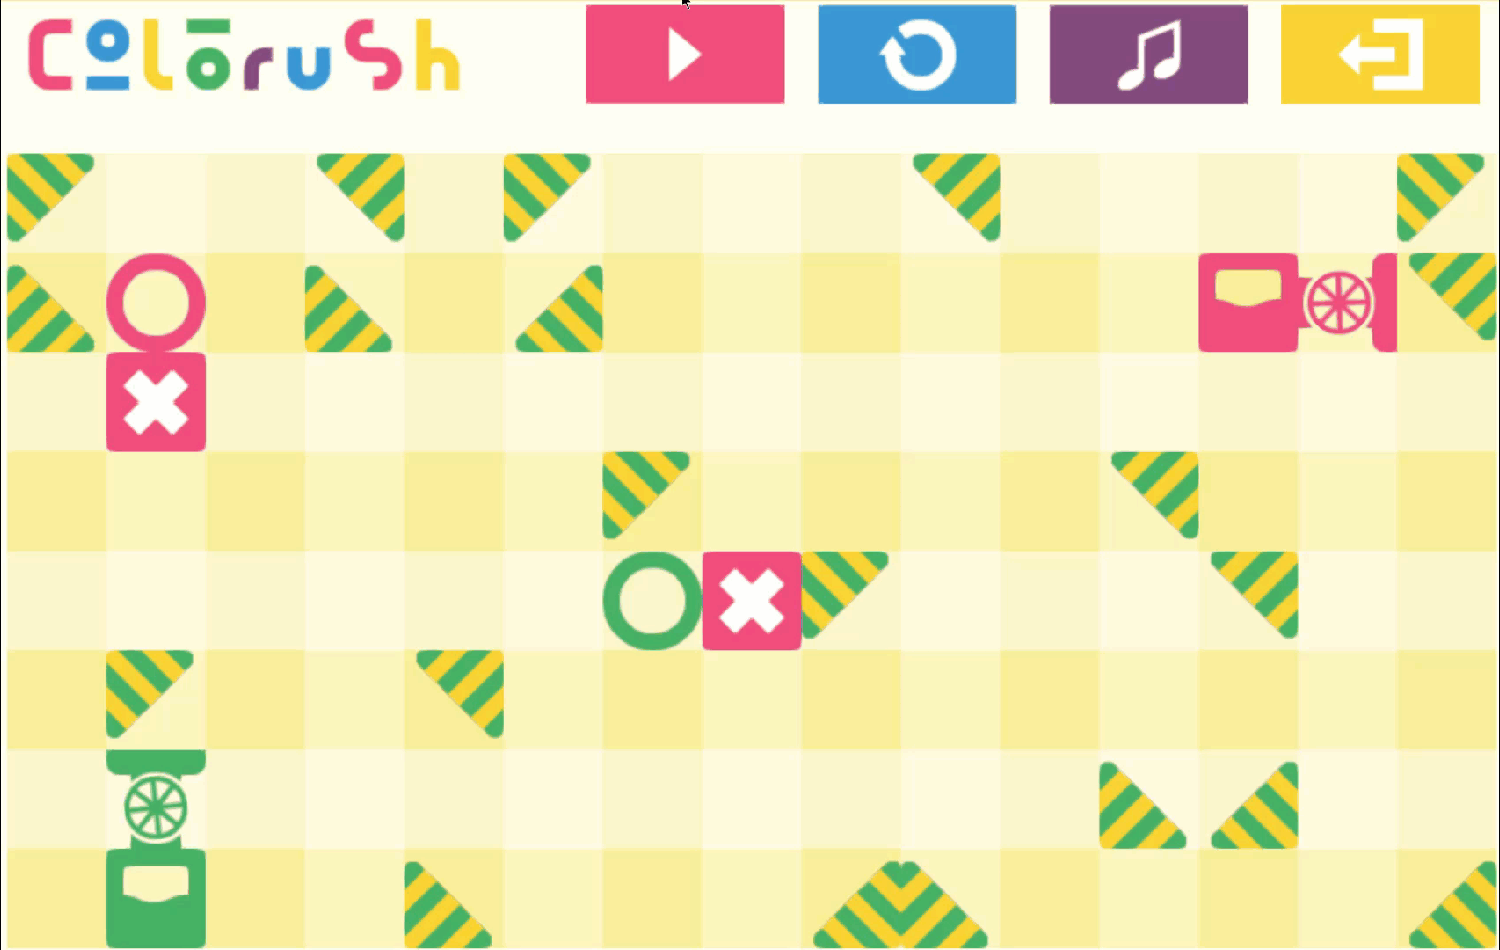 Colorush Game Level 9 Screenshot.